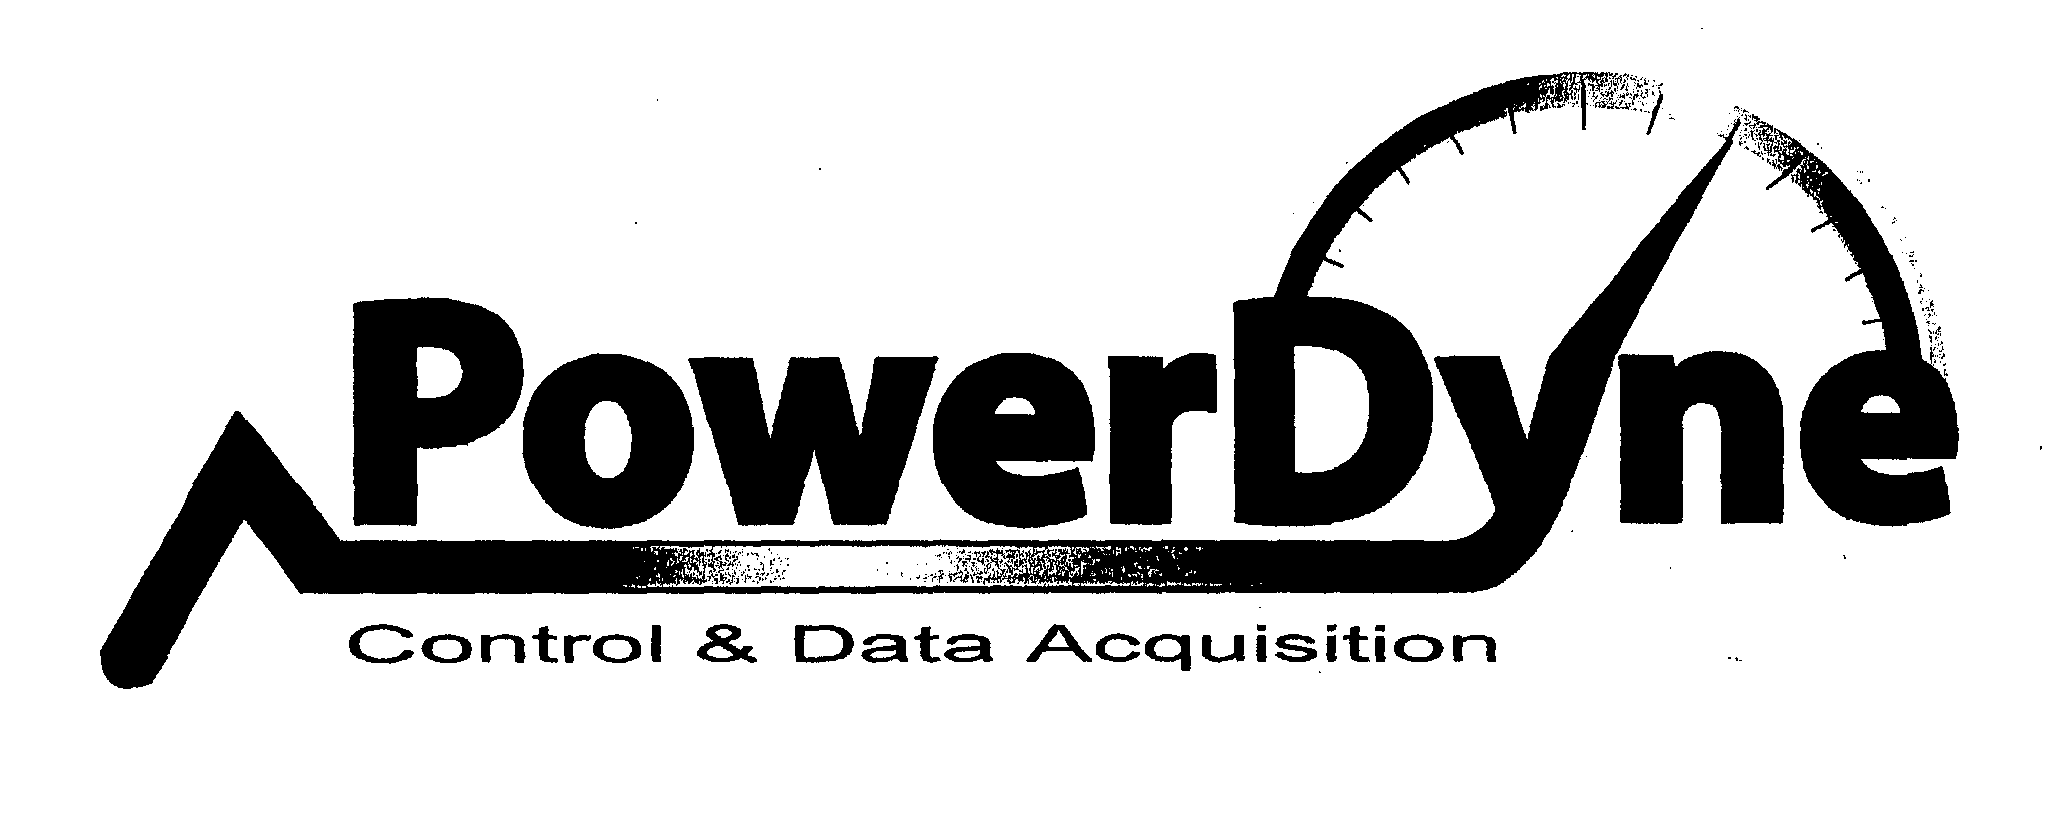  POWERDYNE CONTROL &amp; DATA ACQUISITION